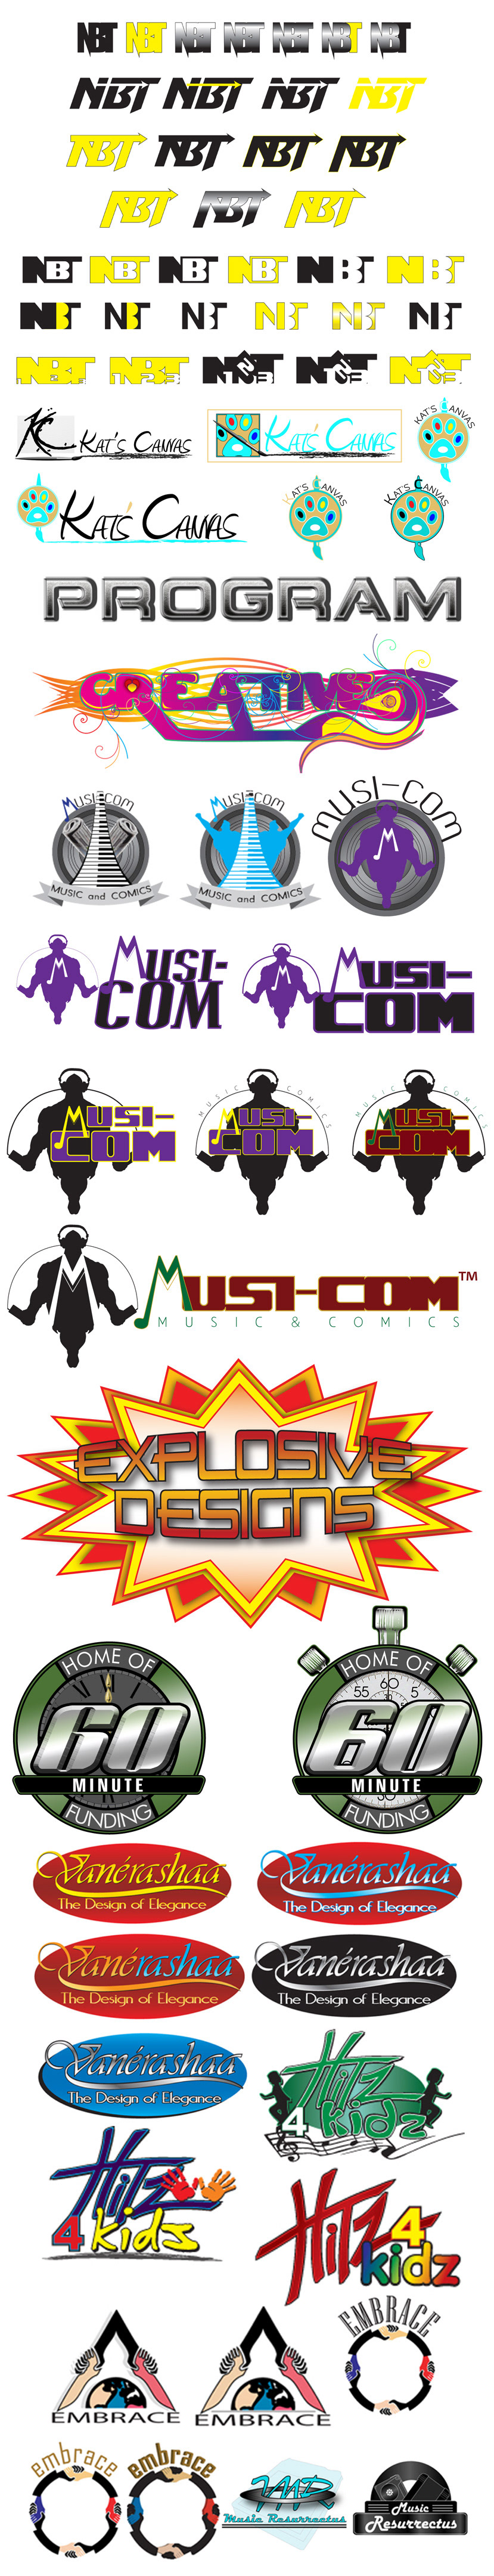 Icon  graphic design type  Type design  branding  design  creativity   marketing  type  art logo logos creative graphic art